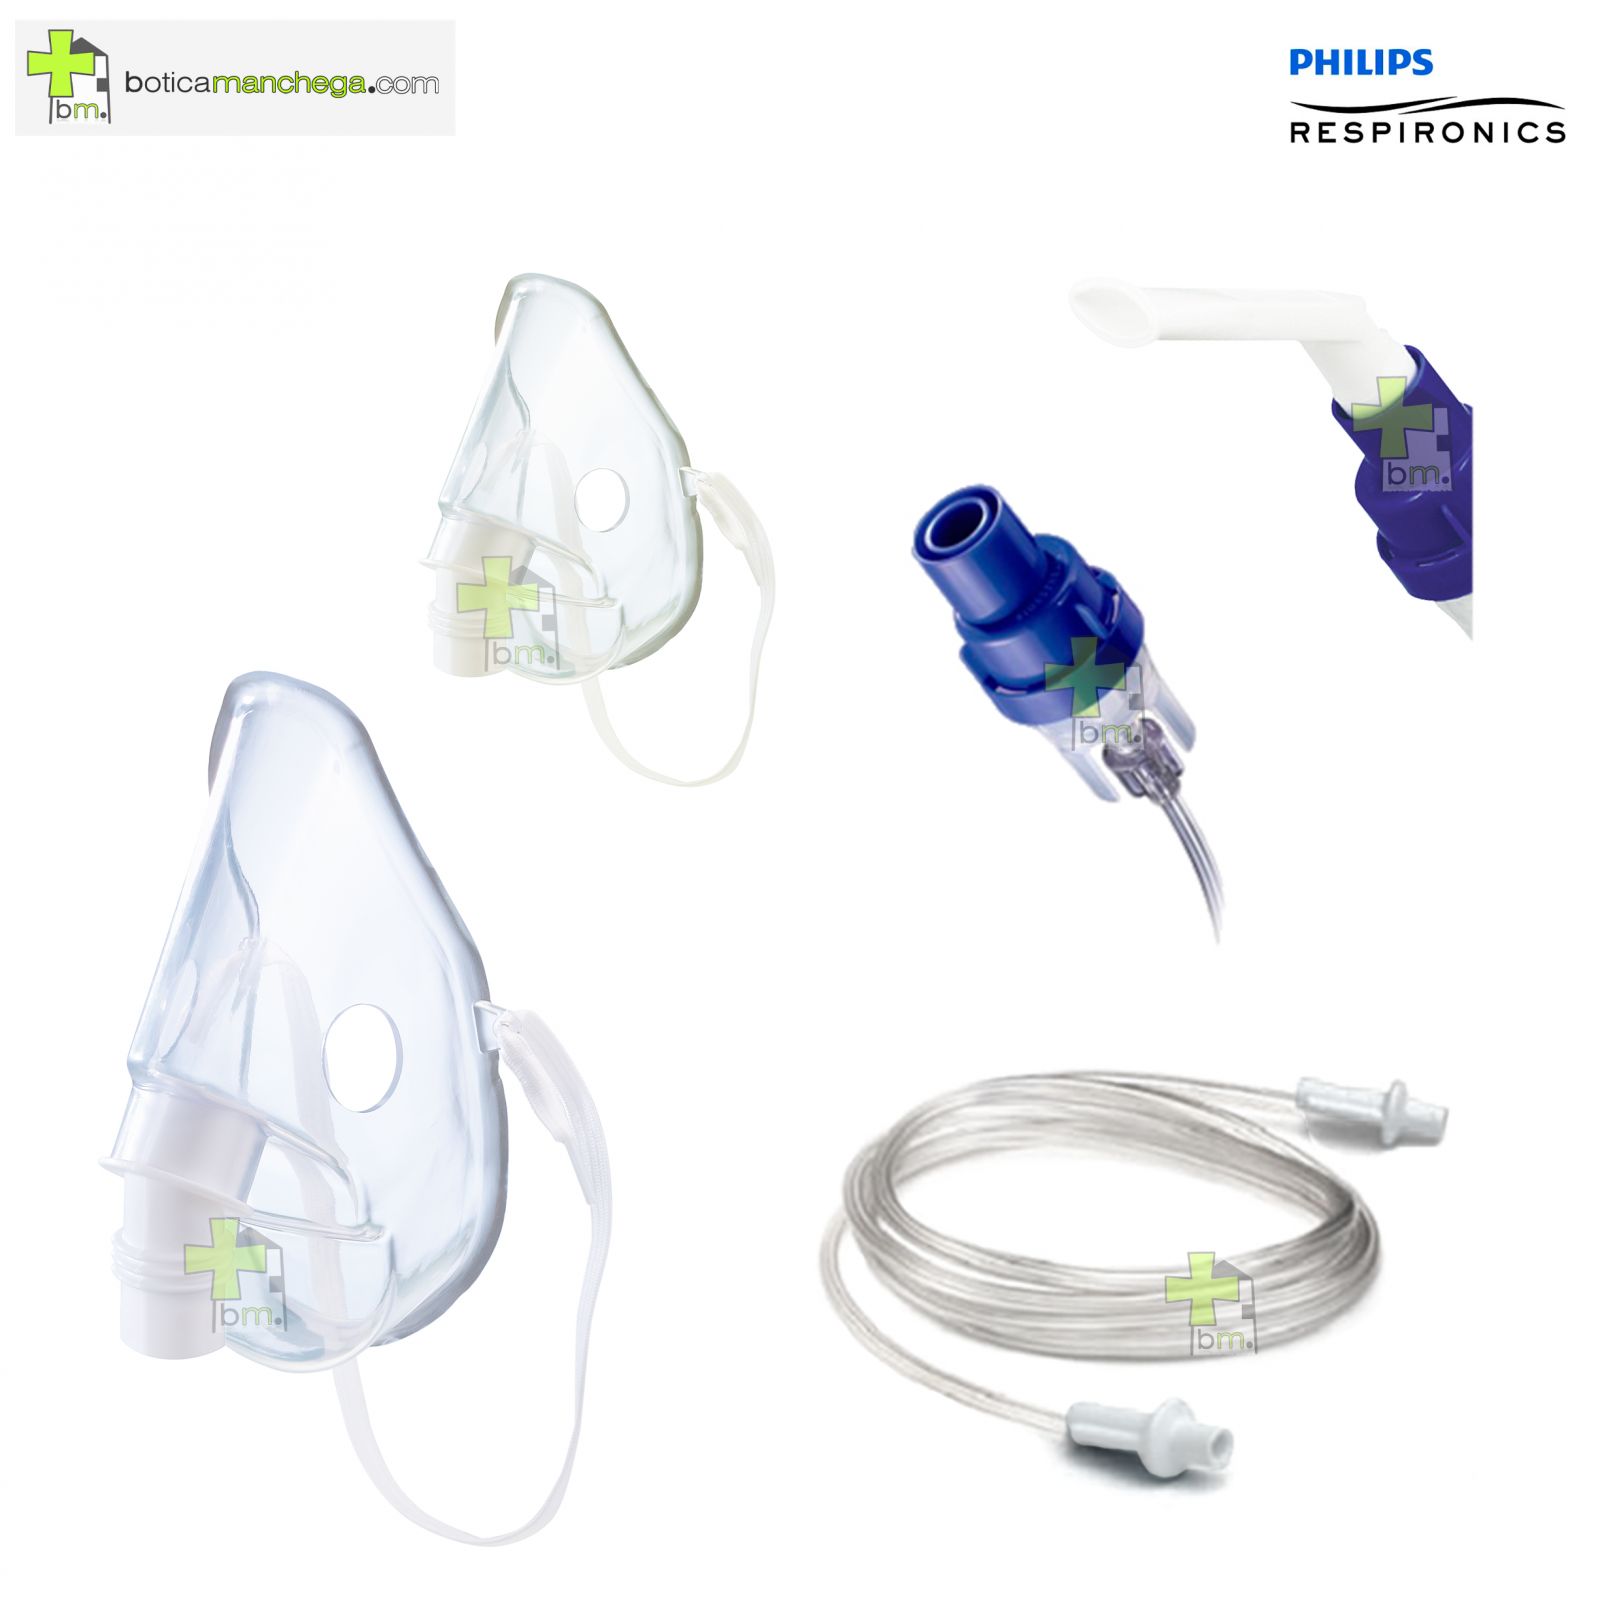 Philips Respironics Kit Nebulizador SideStream Accesorios